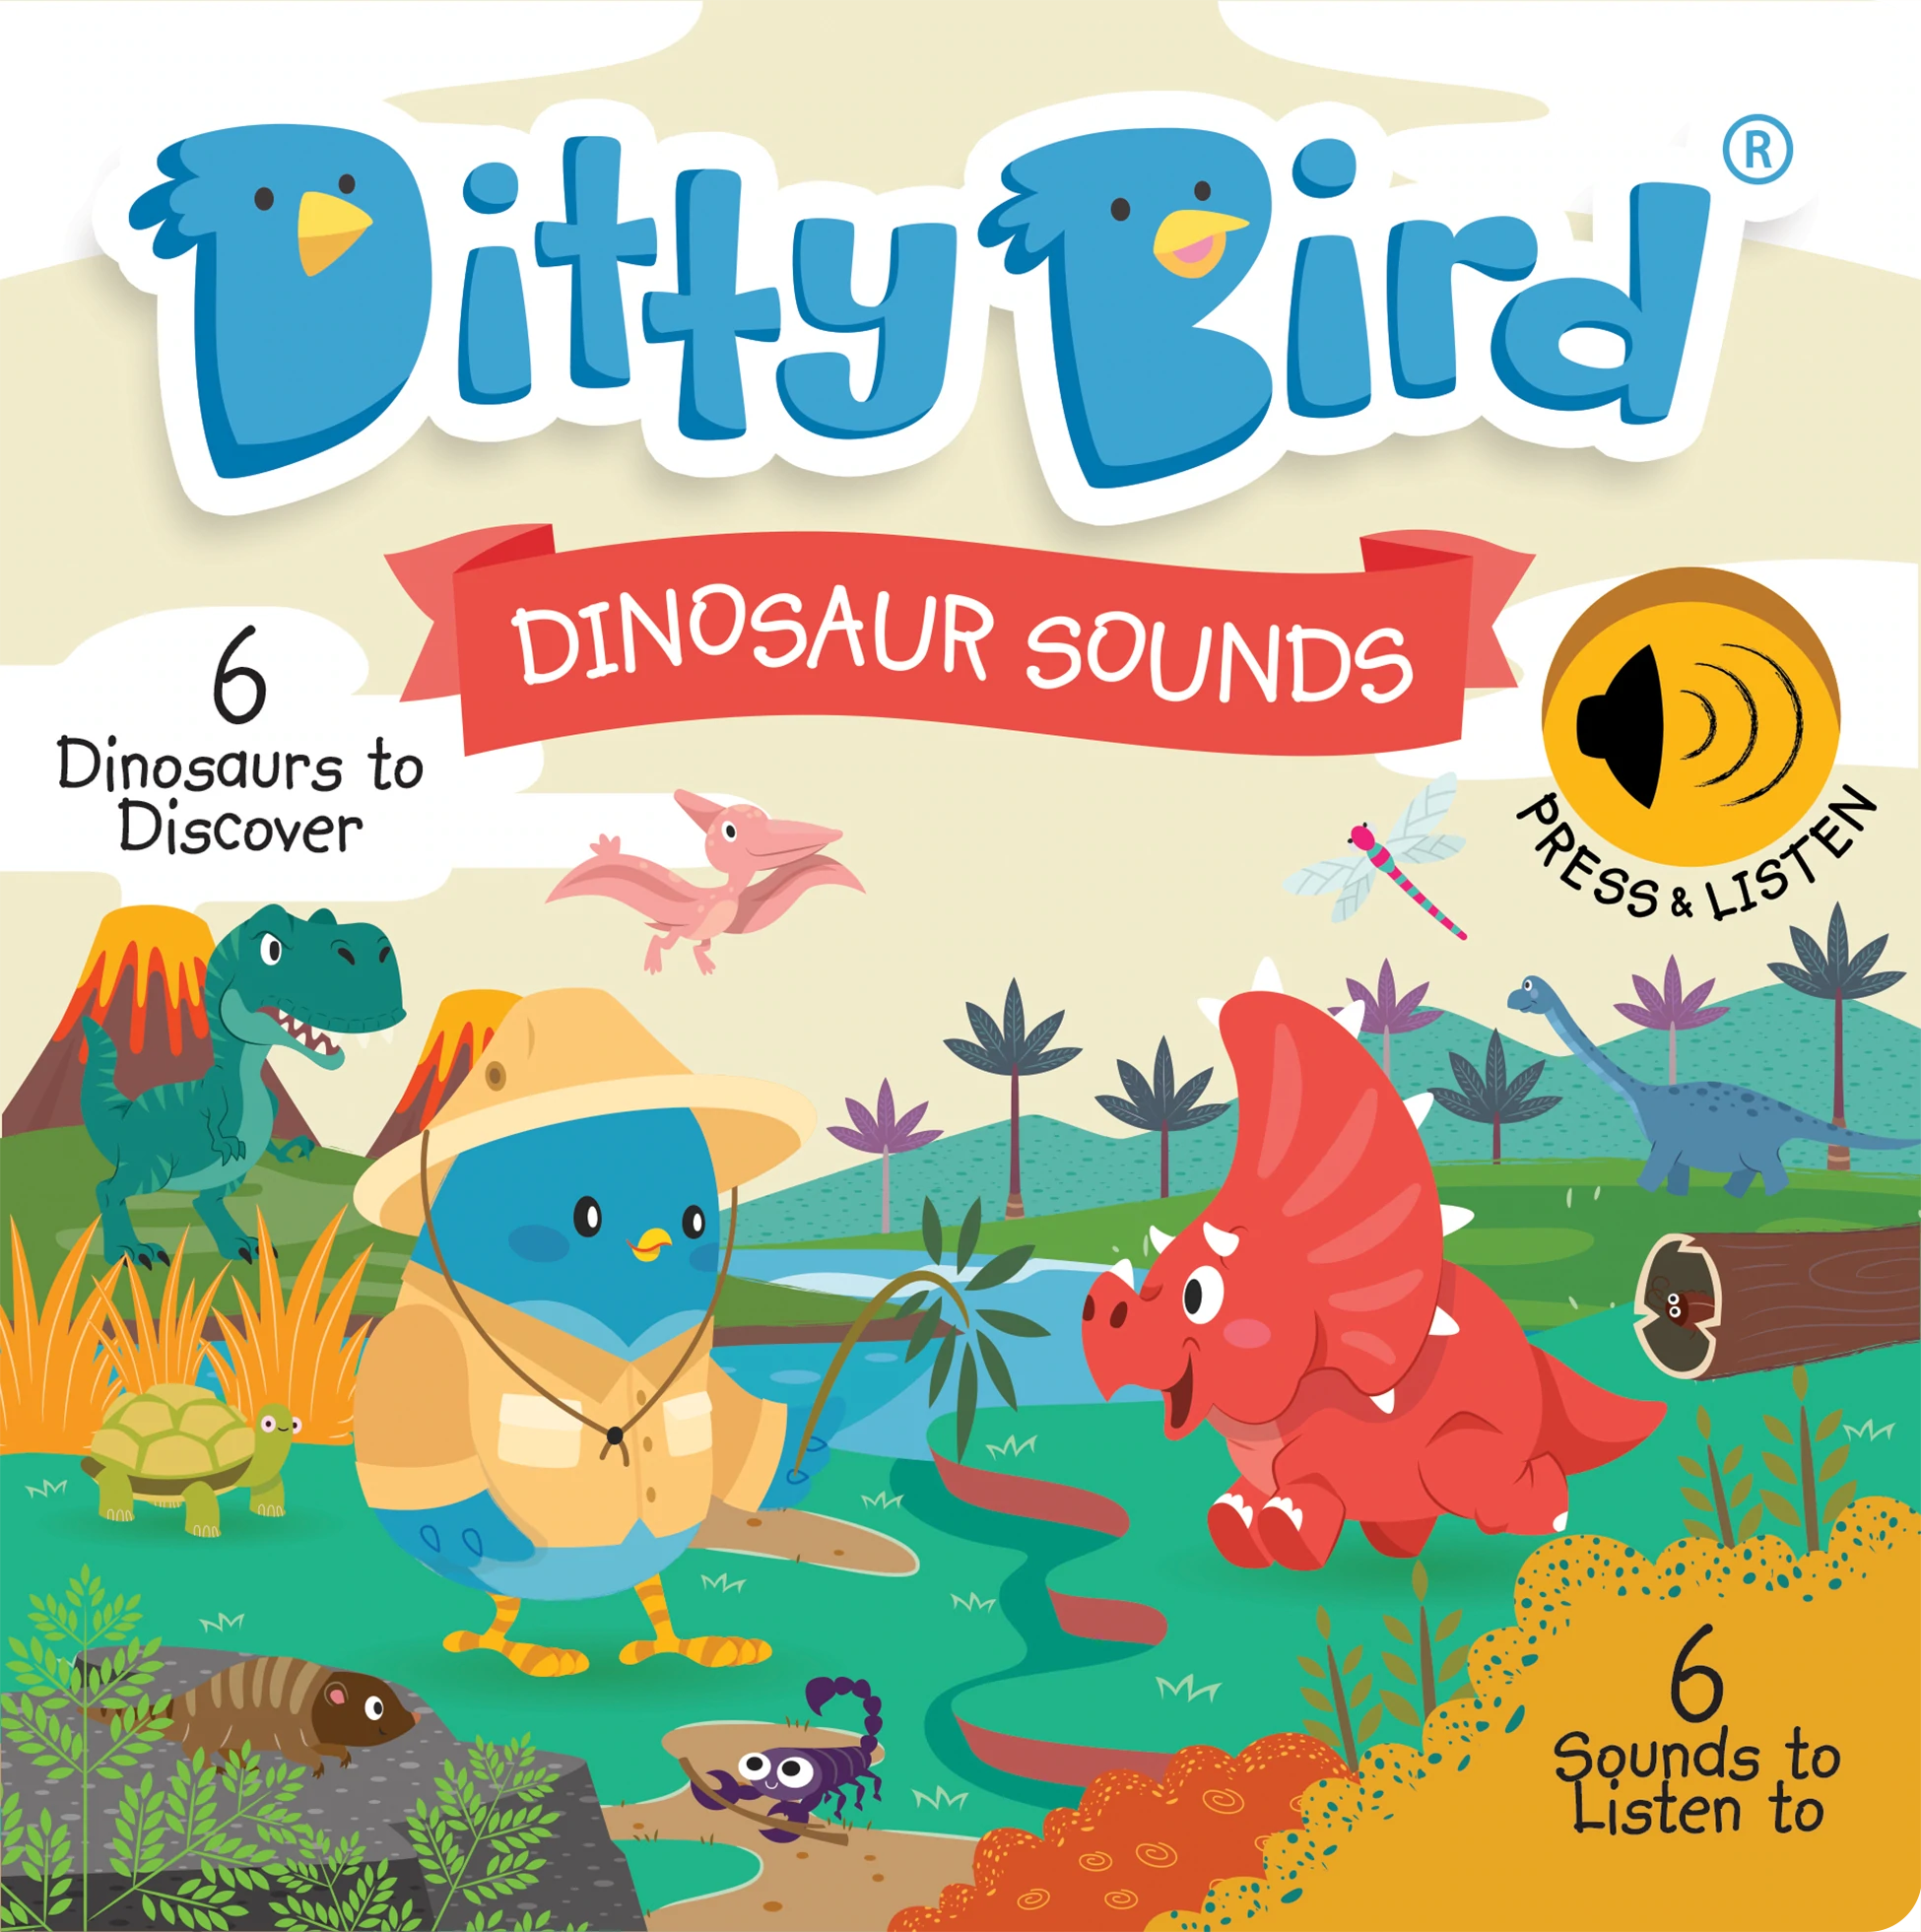 Dinosaur Sounds by Ditty Bird